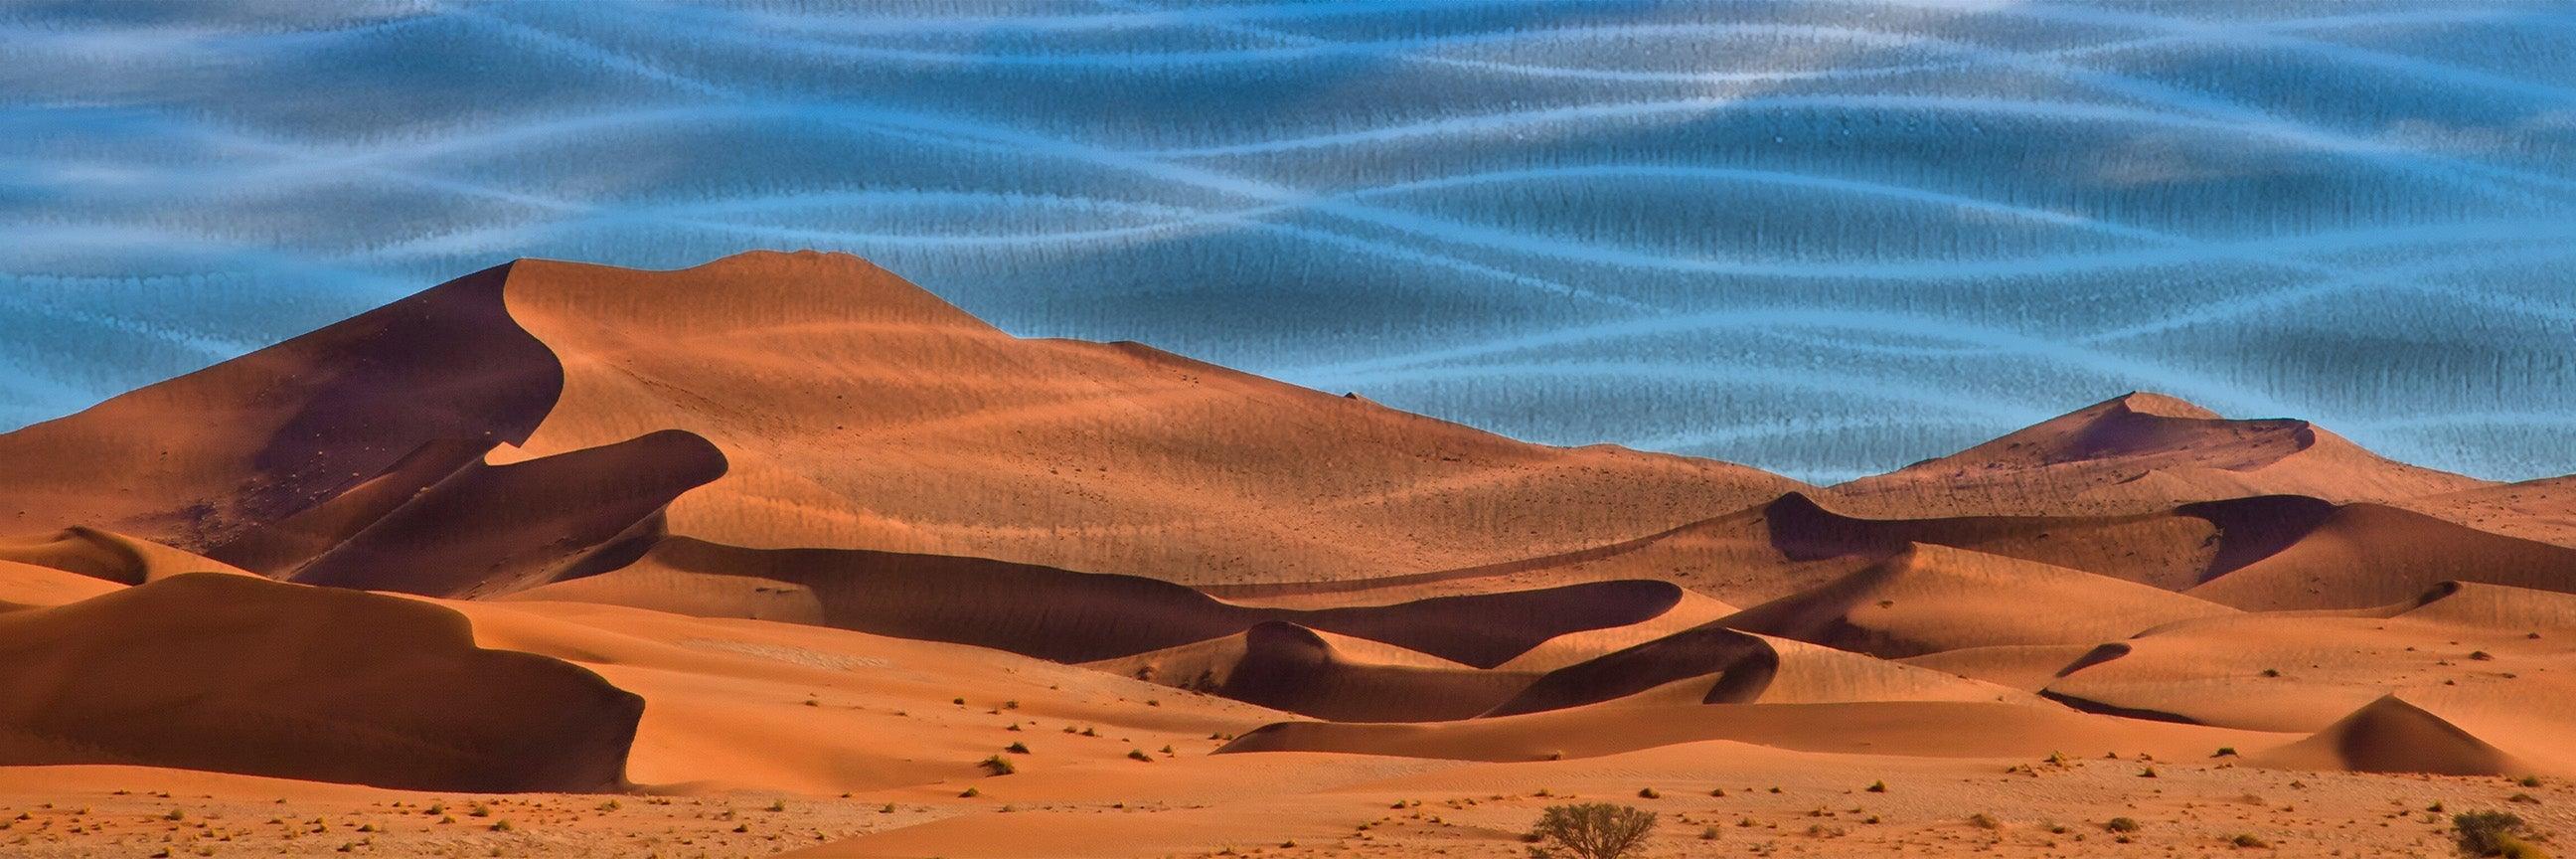 Scenery - Wild Desert Dunes